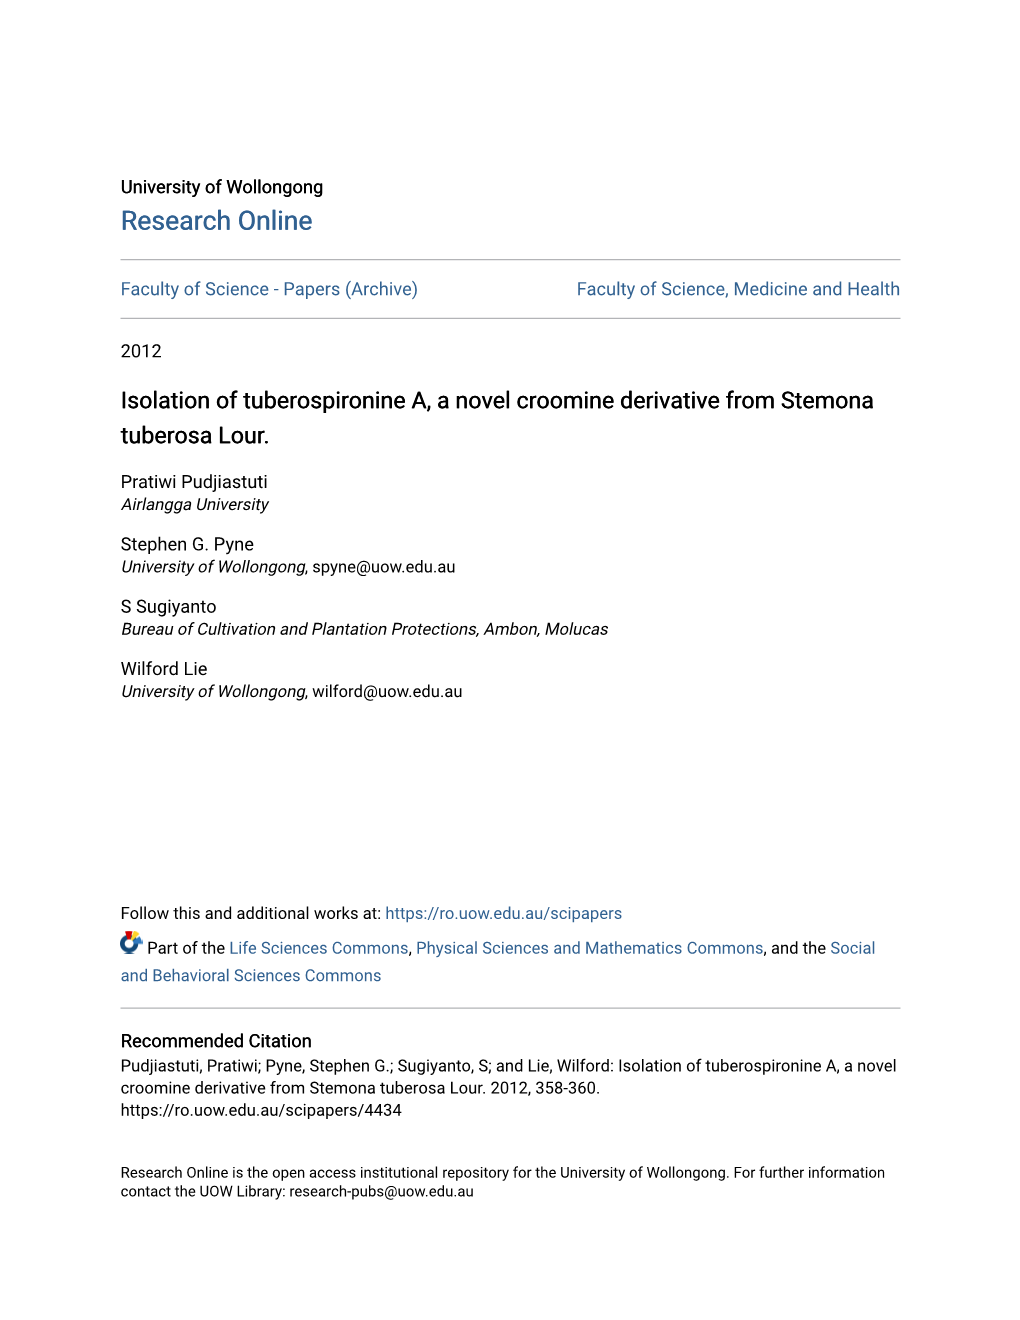 Isolation of Tuberospironine A, a Novel Croomine Derivative from Stemona Tuberosa Lour